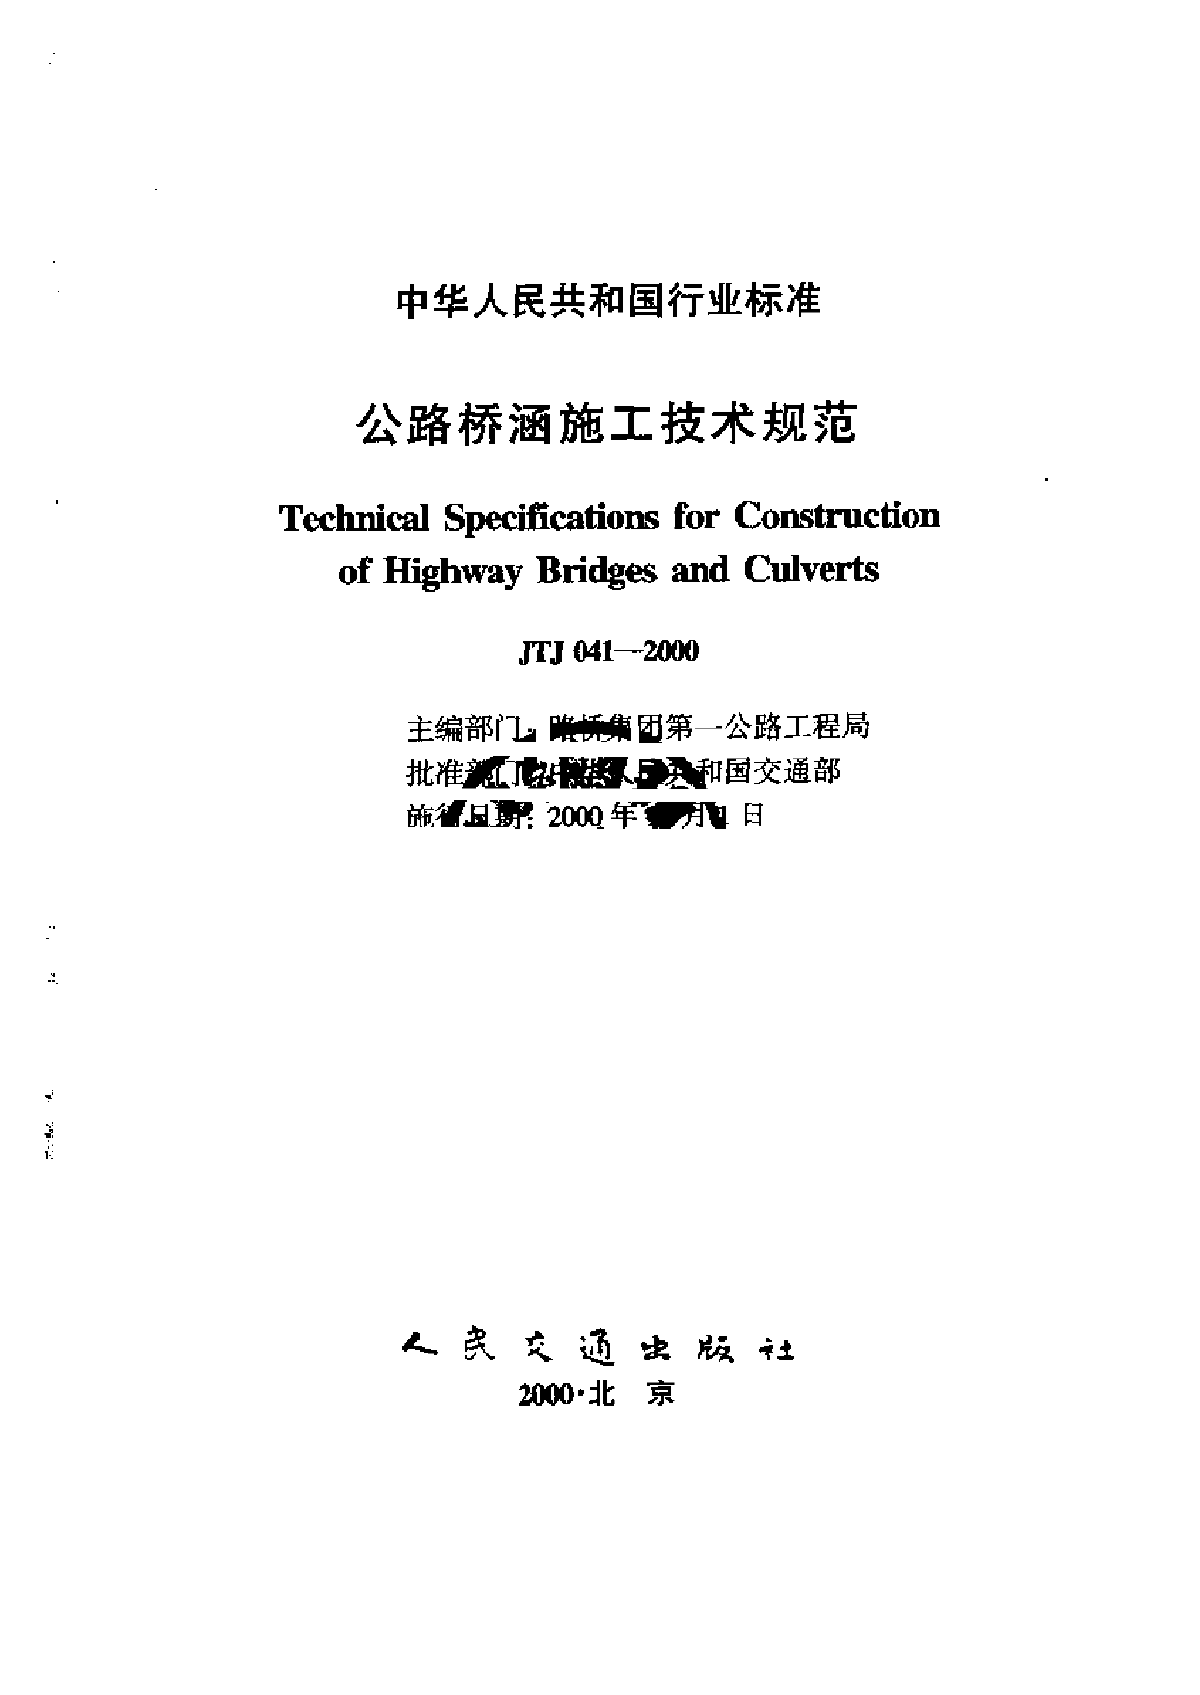  JTJ 041-2000 Technical Specification for Construction of Highway Bridges - Figure 2